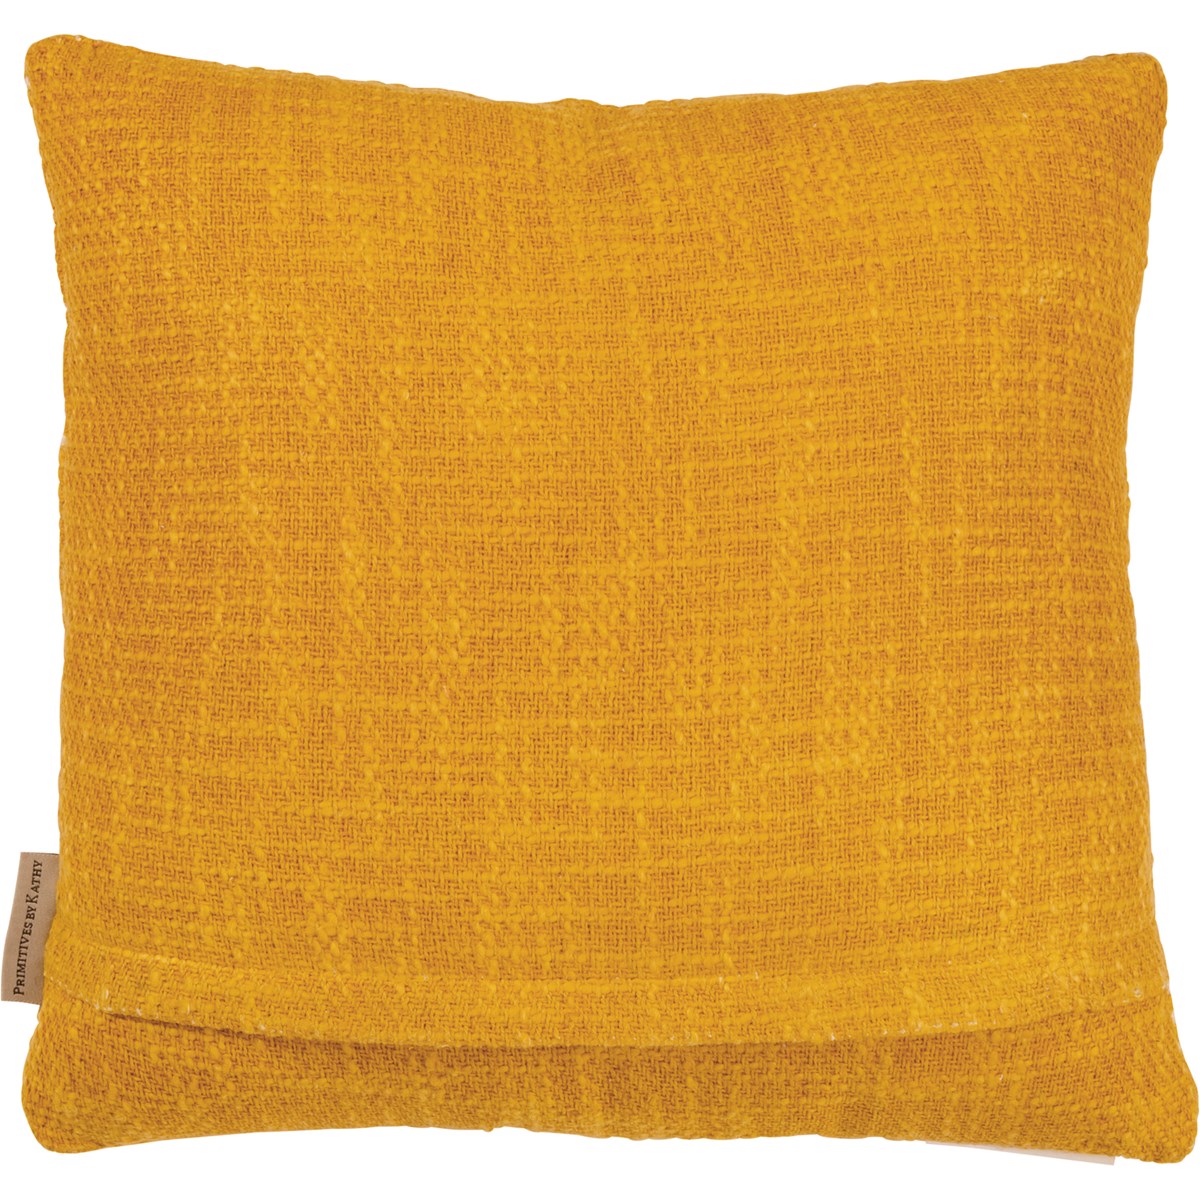 Saffron Mix Pillow - Cotton, Zipper